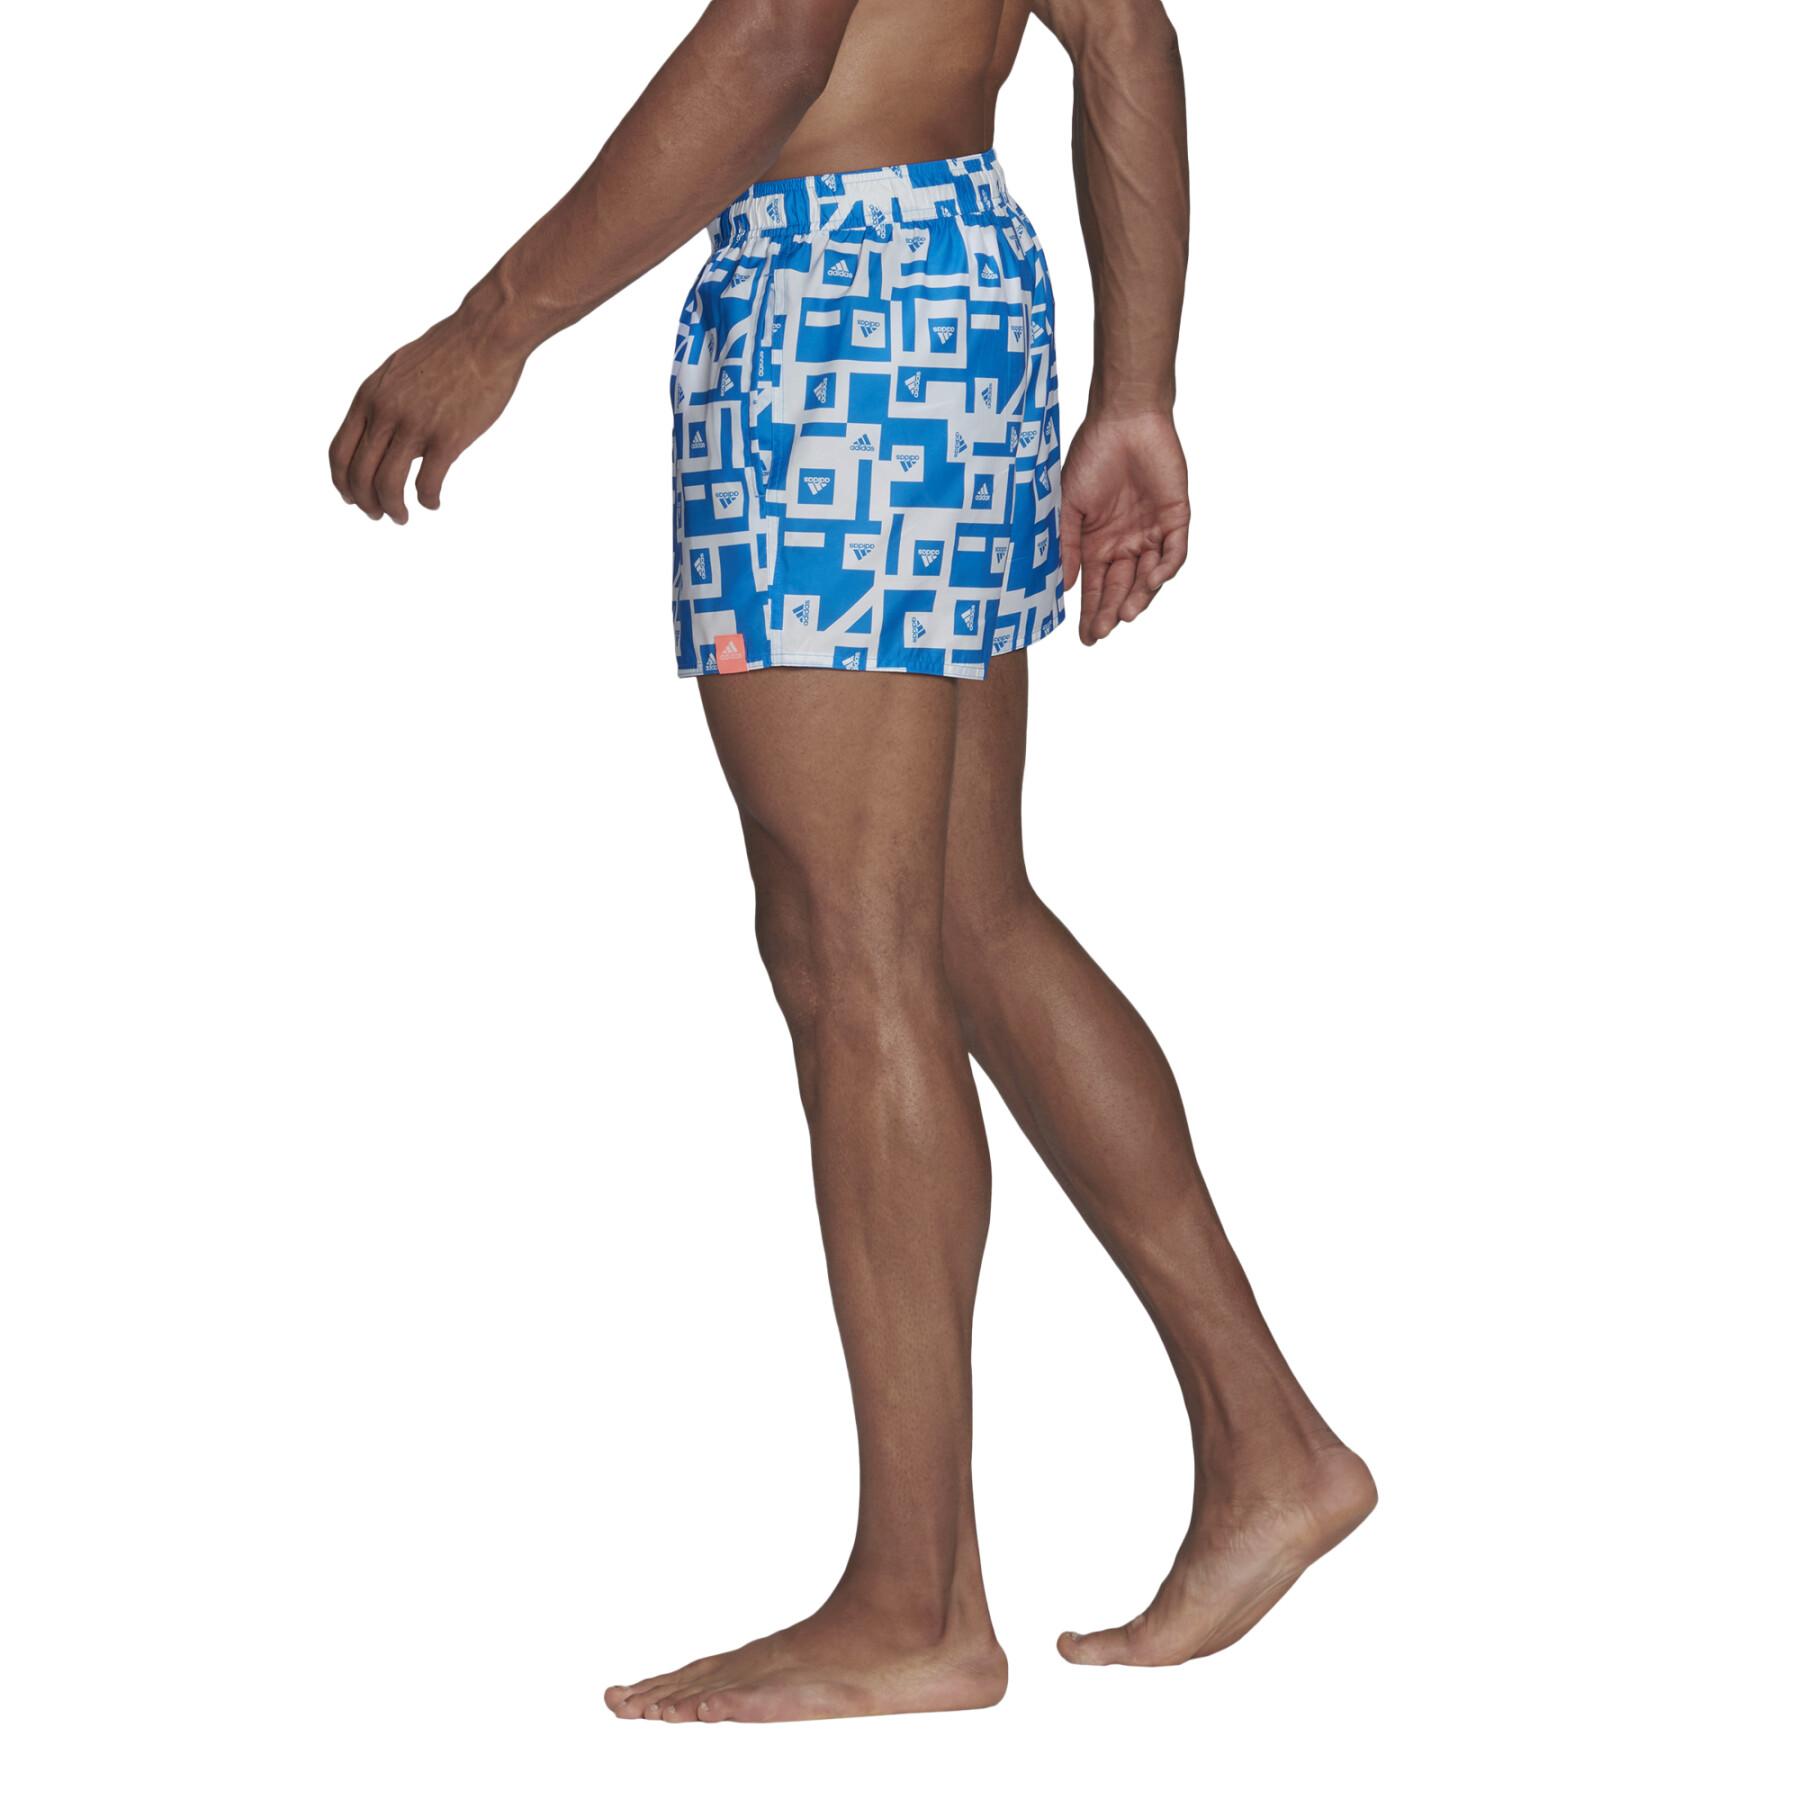 Swim shorts adidas Graphic